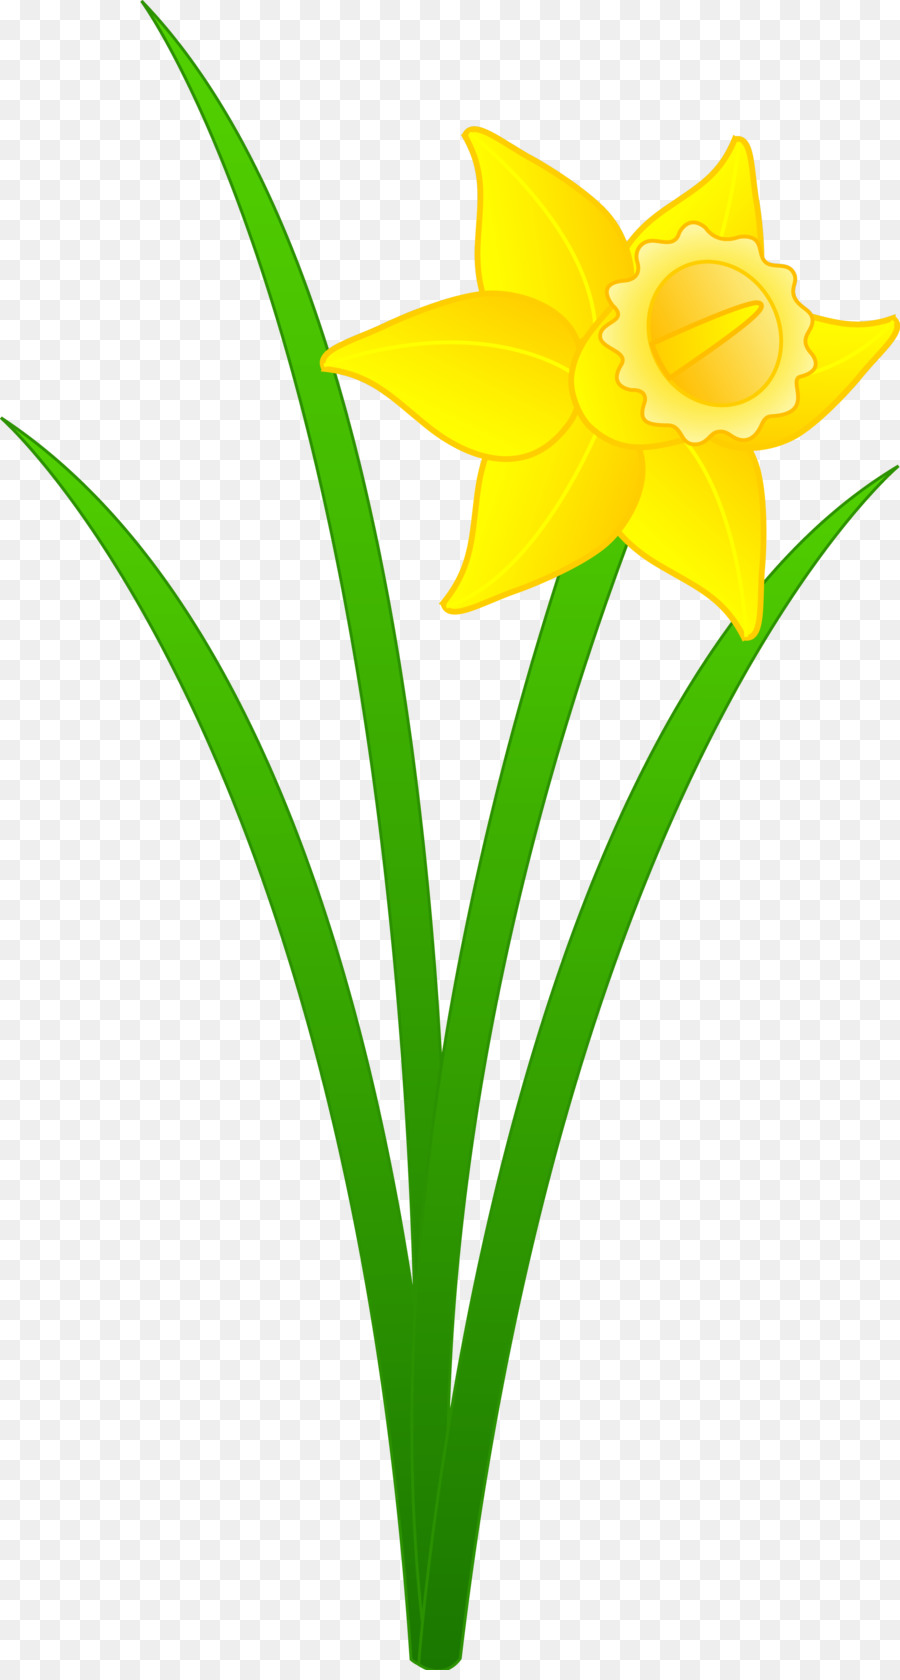 Flowers background flower leaf. Daffodil clipart grass